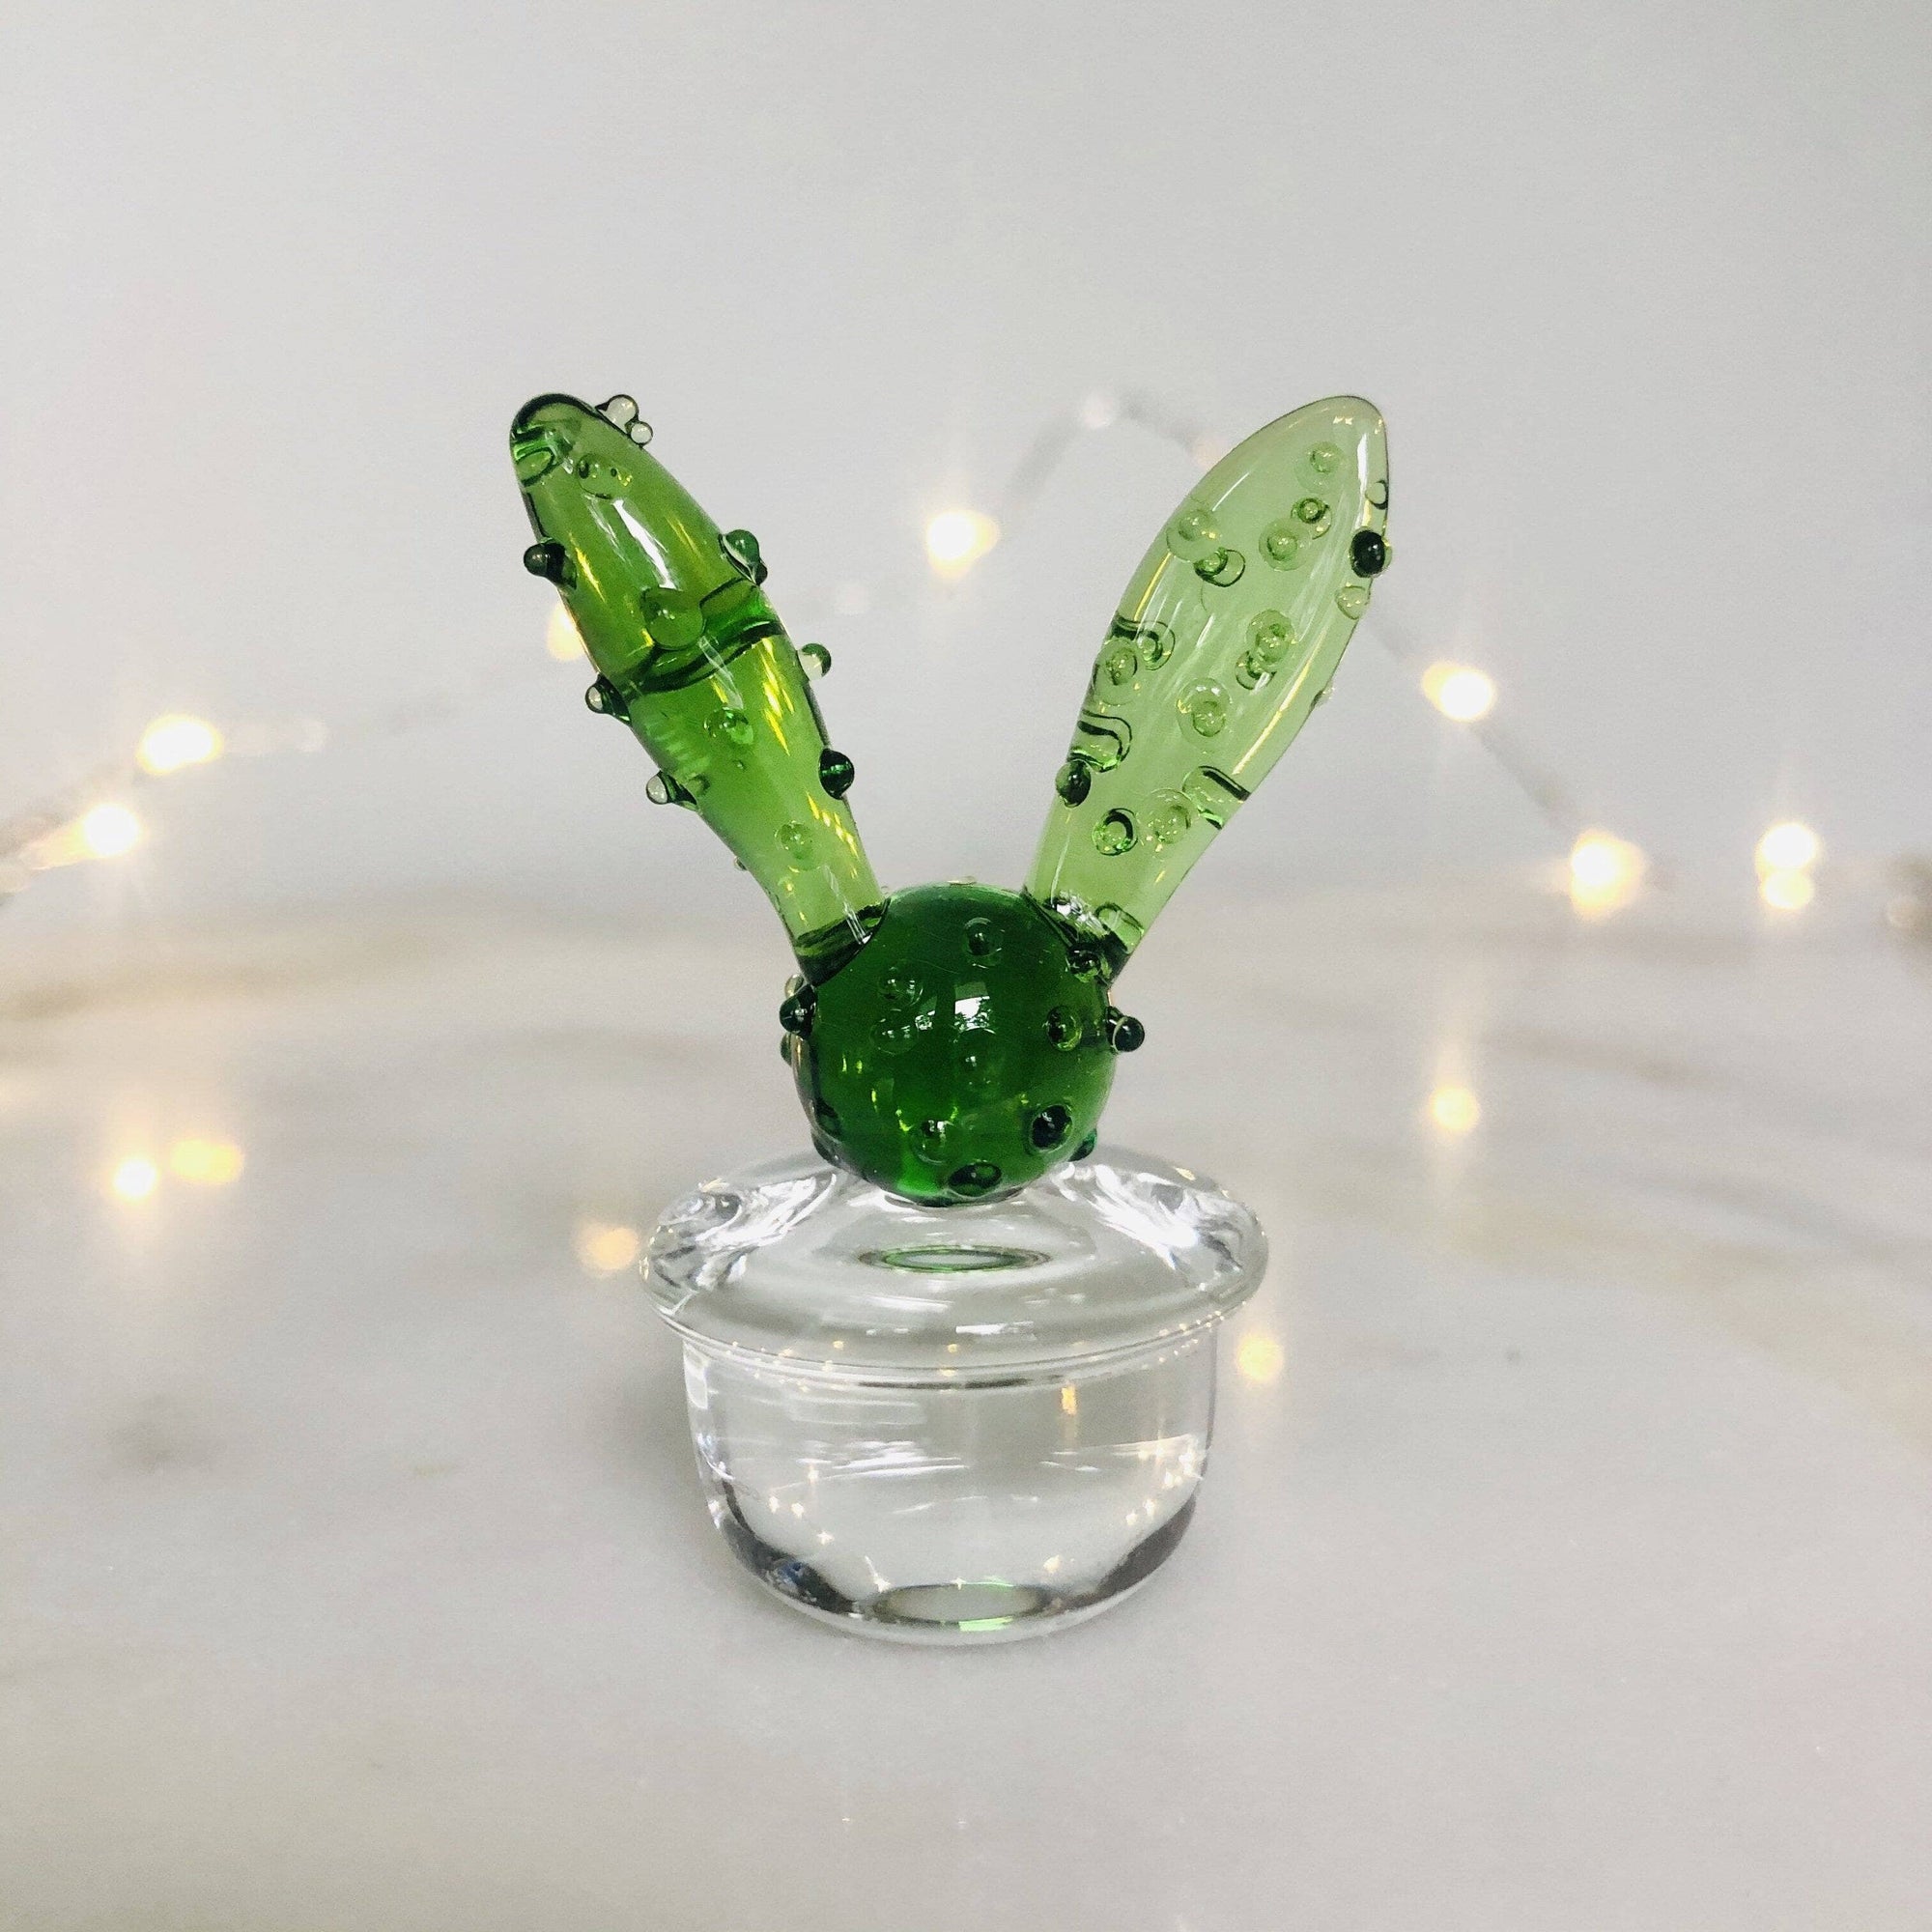 Glass Cactus Good Listener Miniature - 